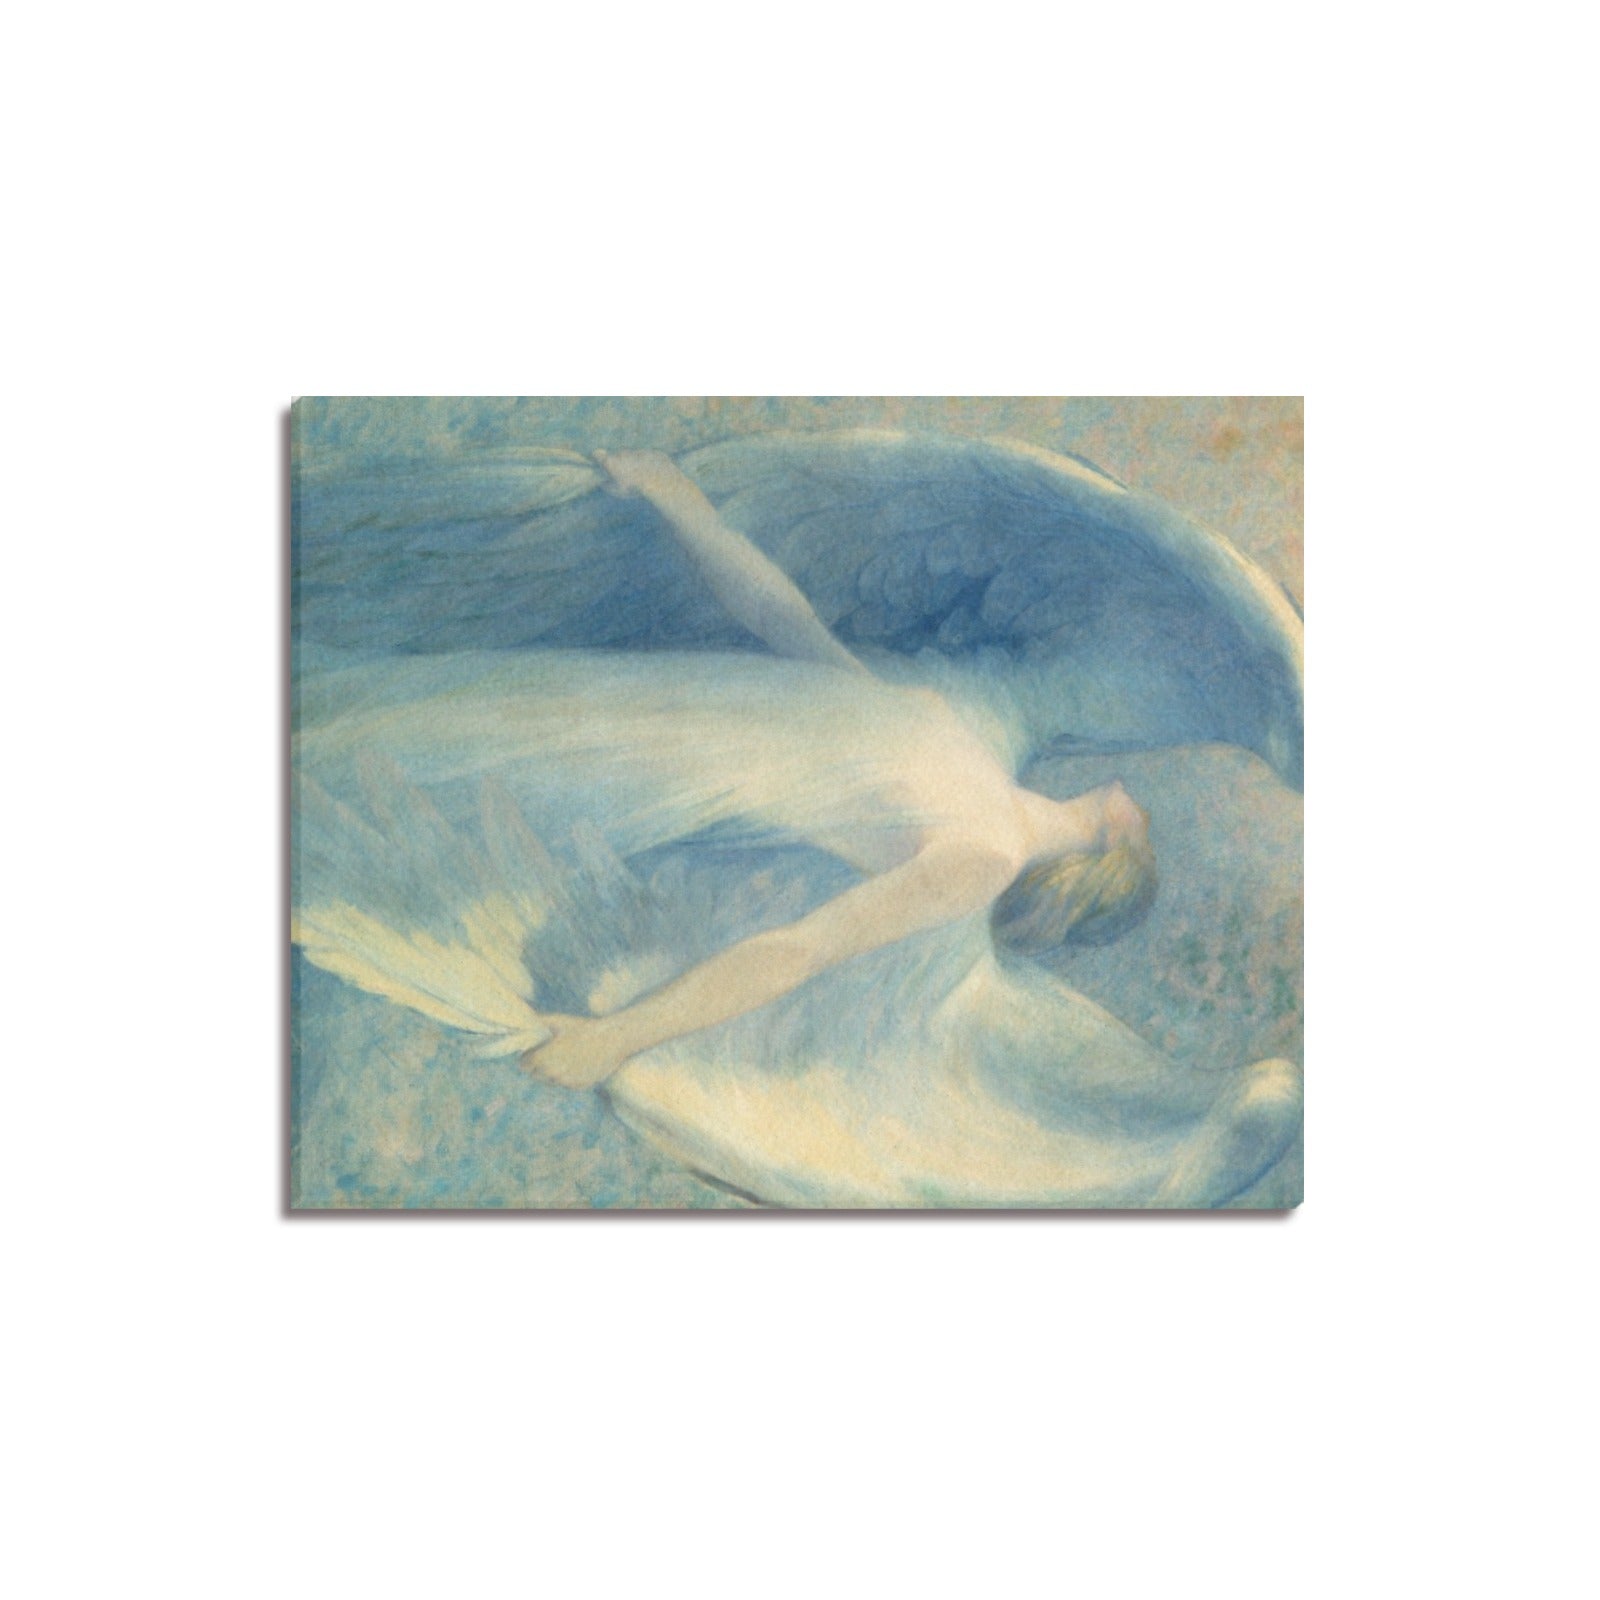 WILLIAM BAXTER CLOSSON - THE ANGEL (ca. 1912) - CANVAS PRINT 16"x 20"